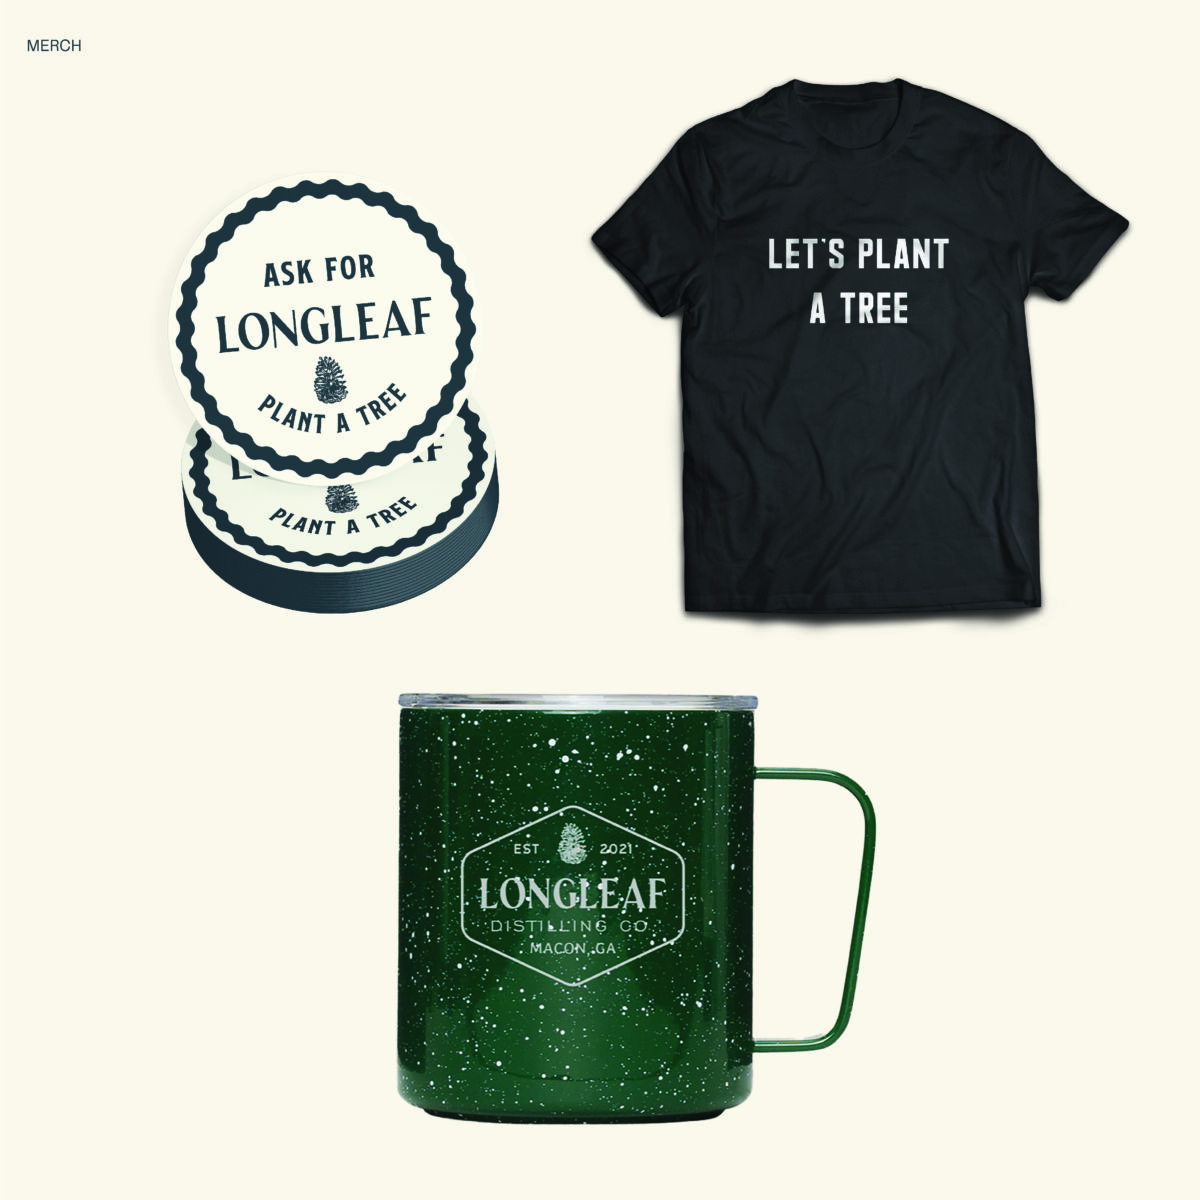 branding, t-shirt and sticker design for longleaf distilling co. 